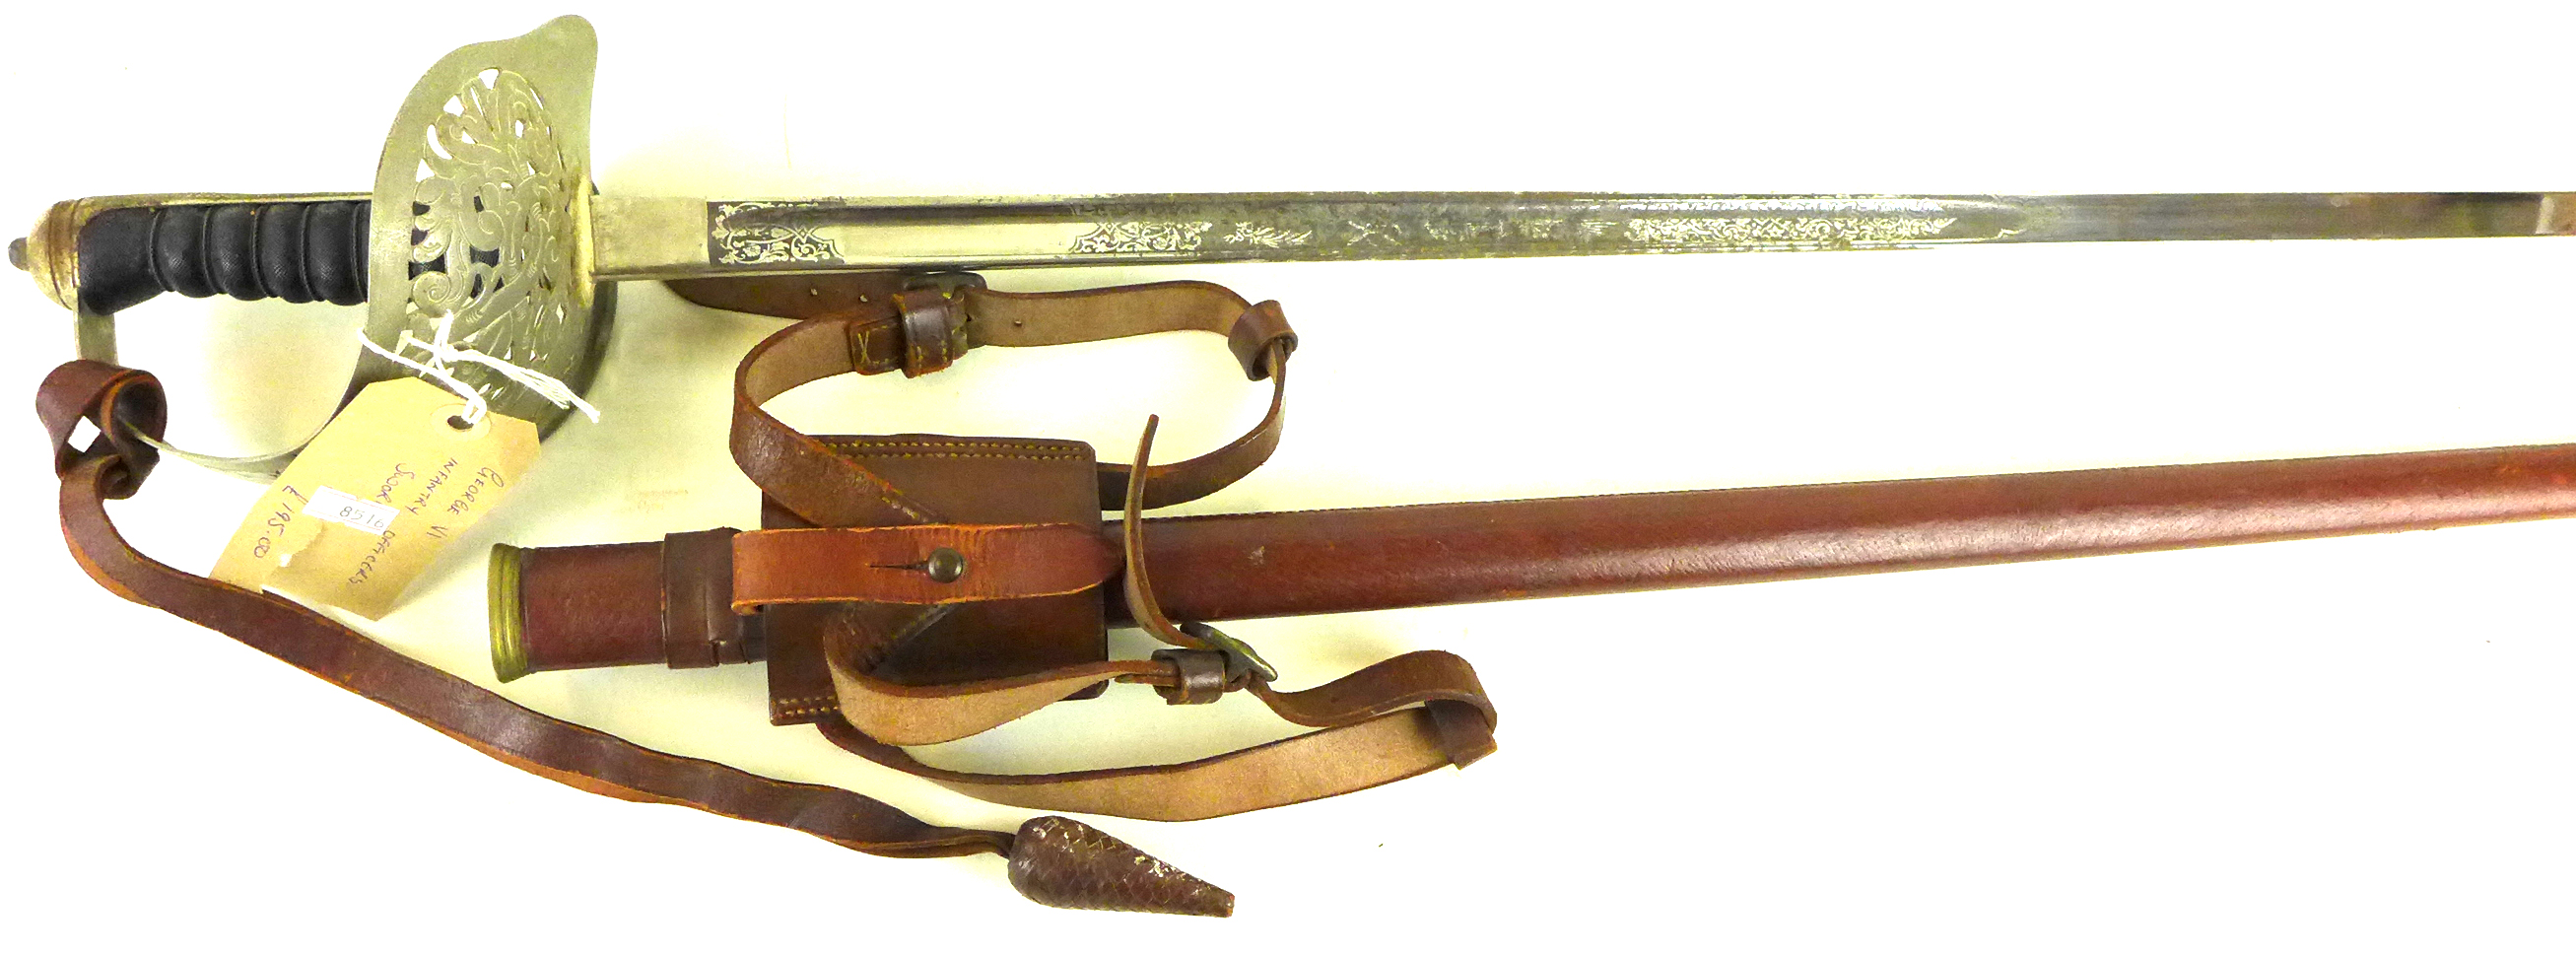 A George VI infantry officers sword,